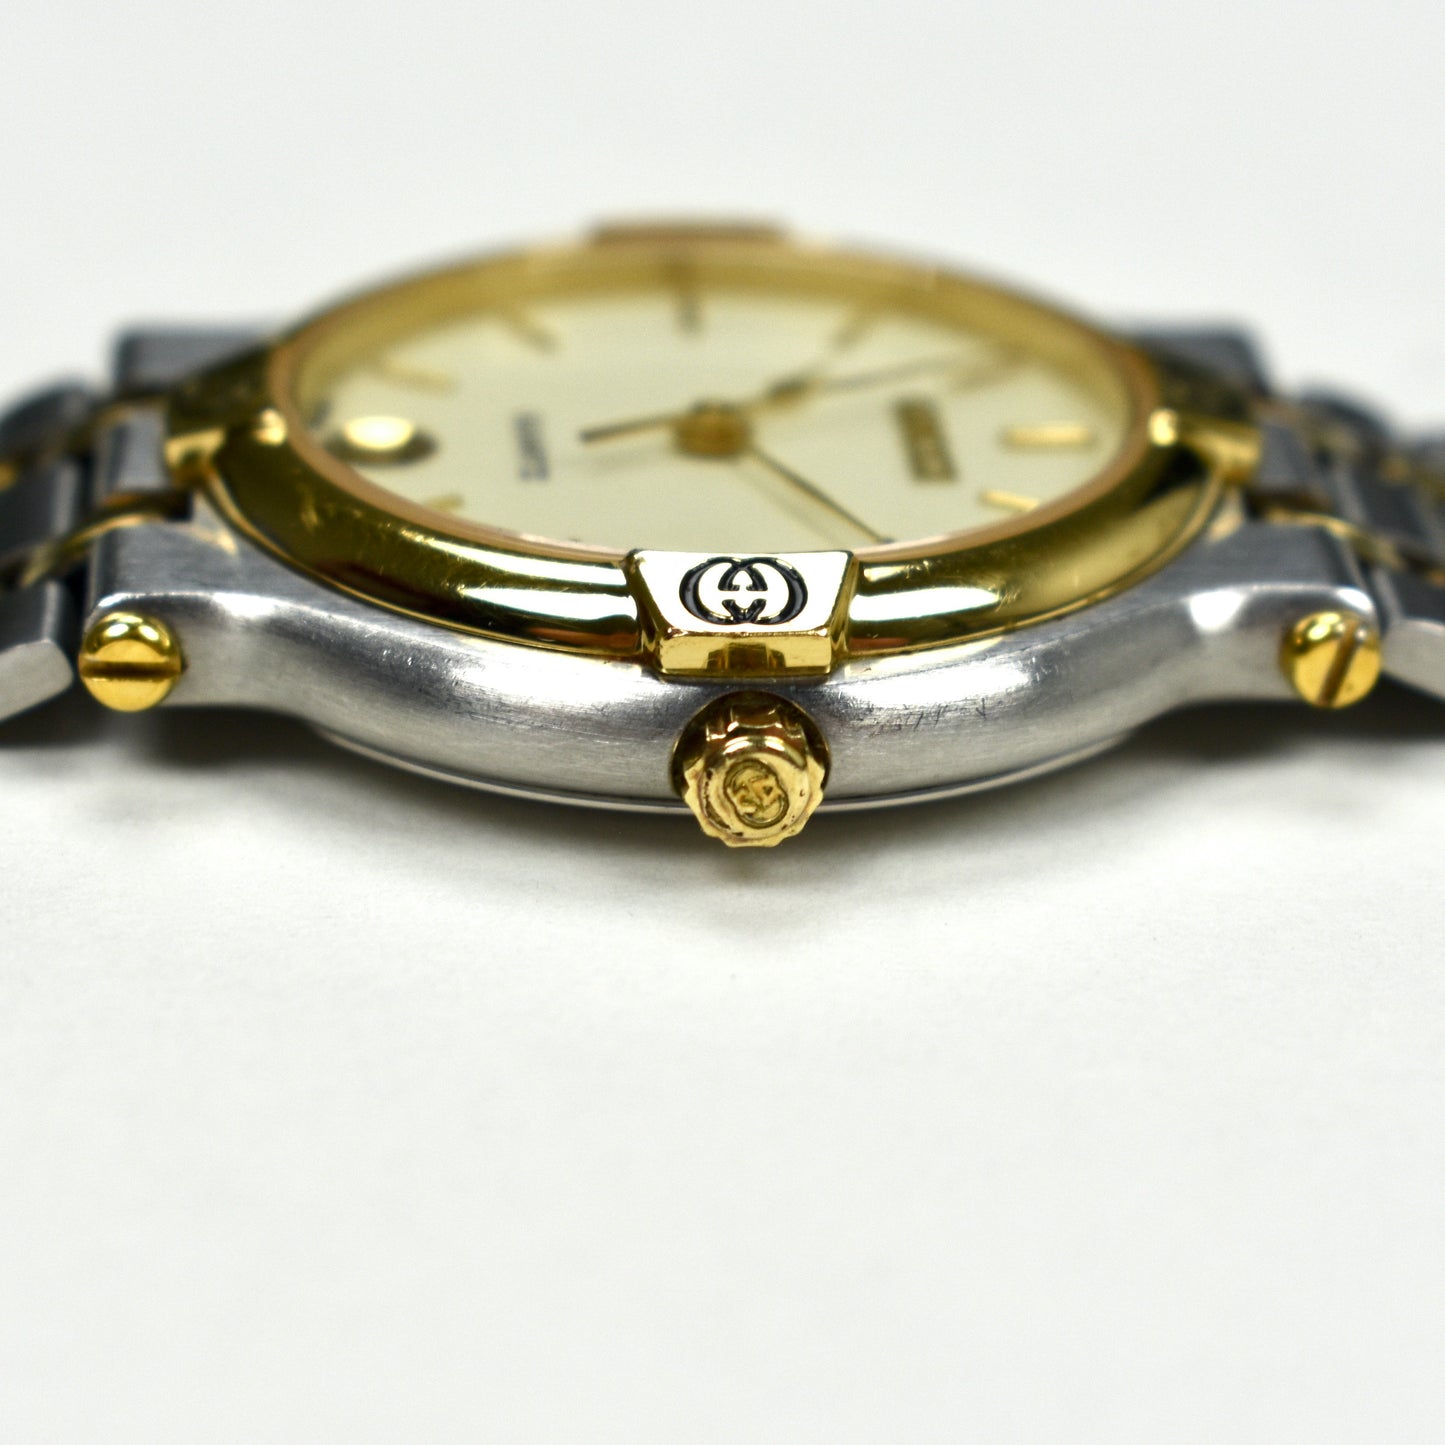 Gucci - 9000M Gold / Steel Cream Dial Watch